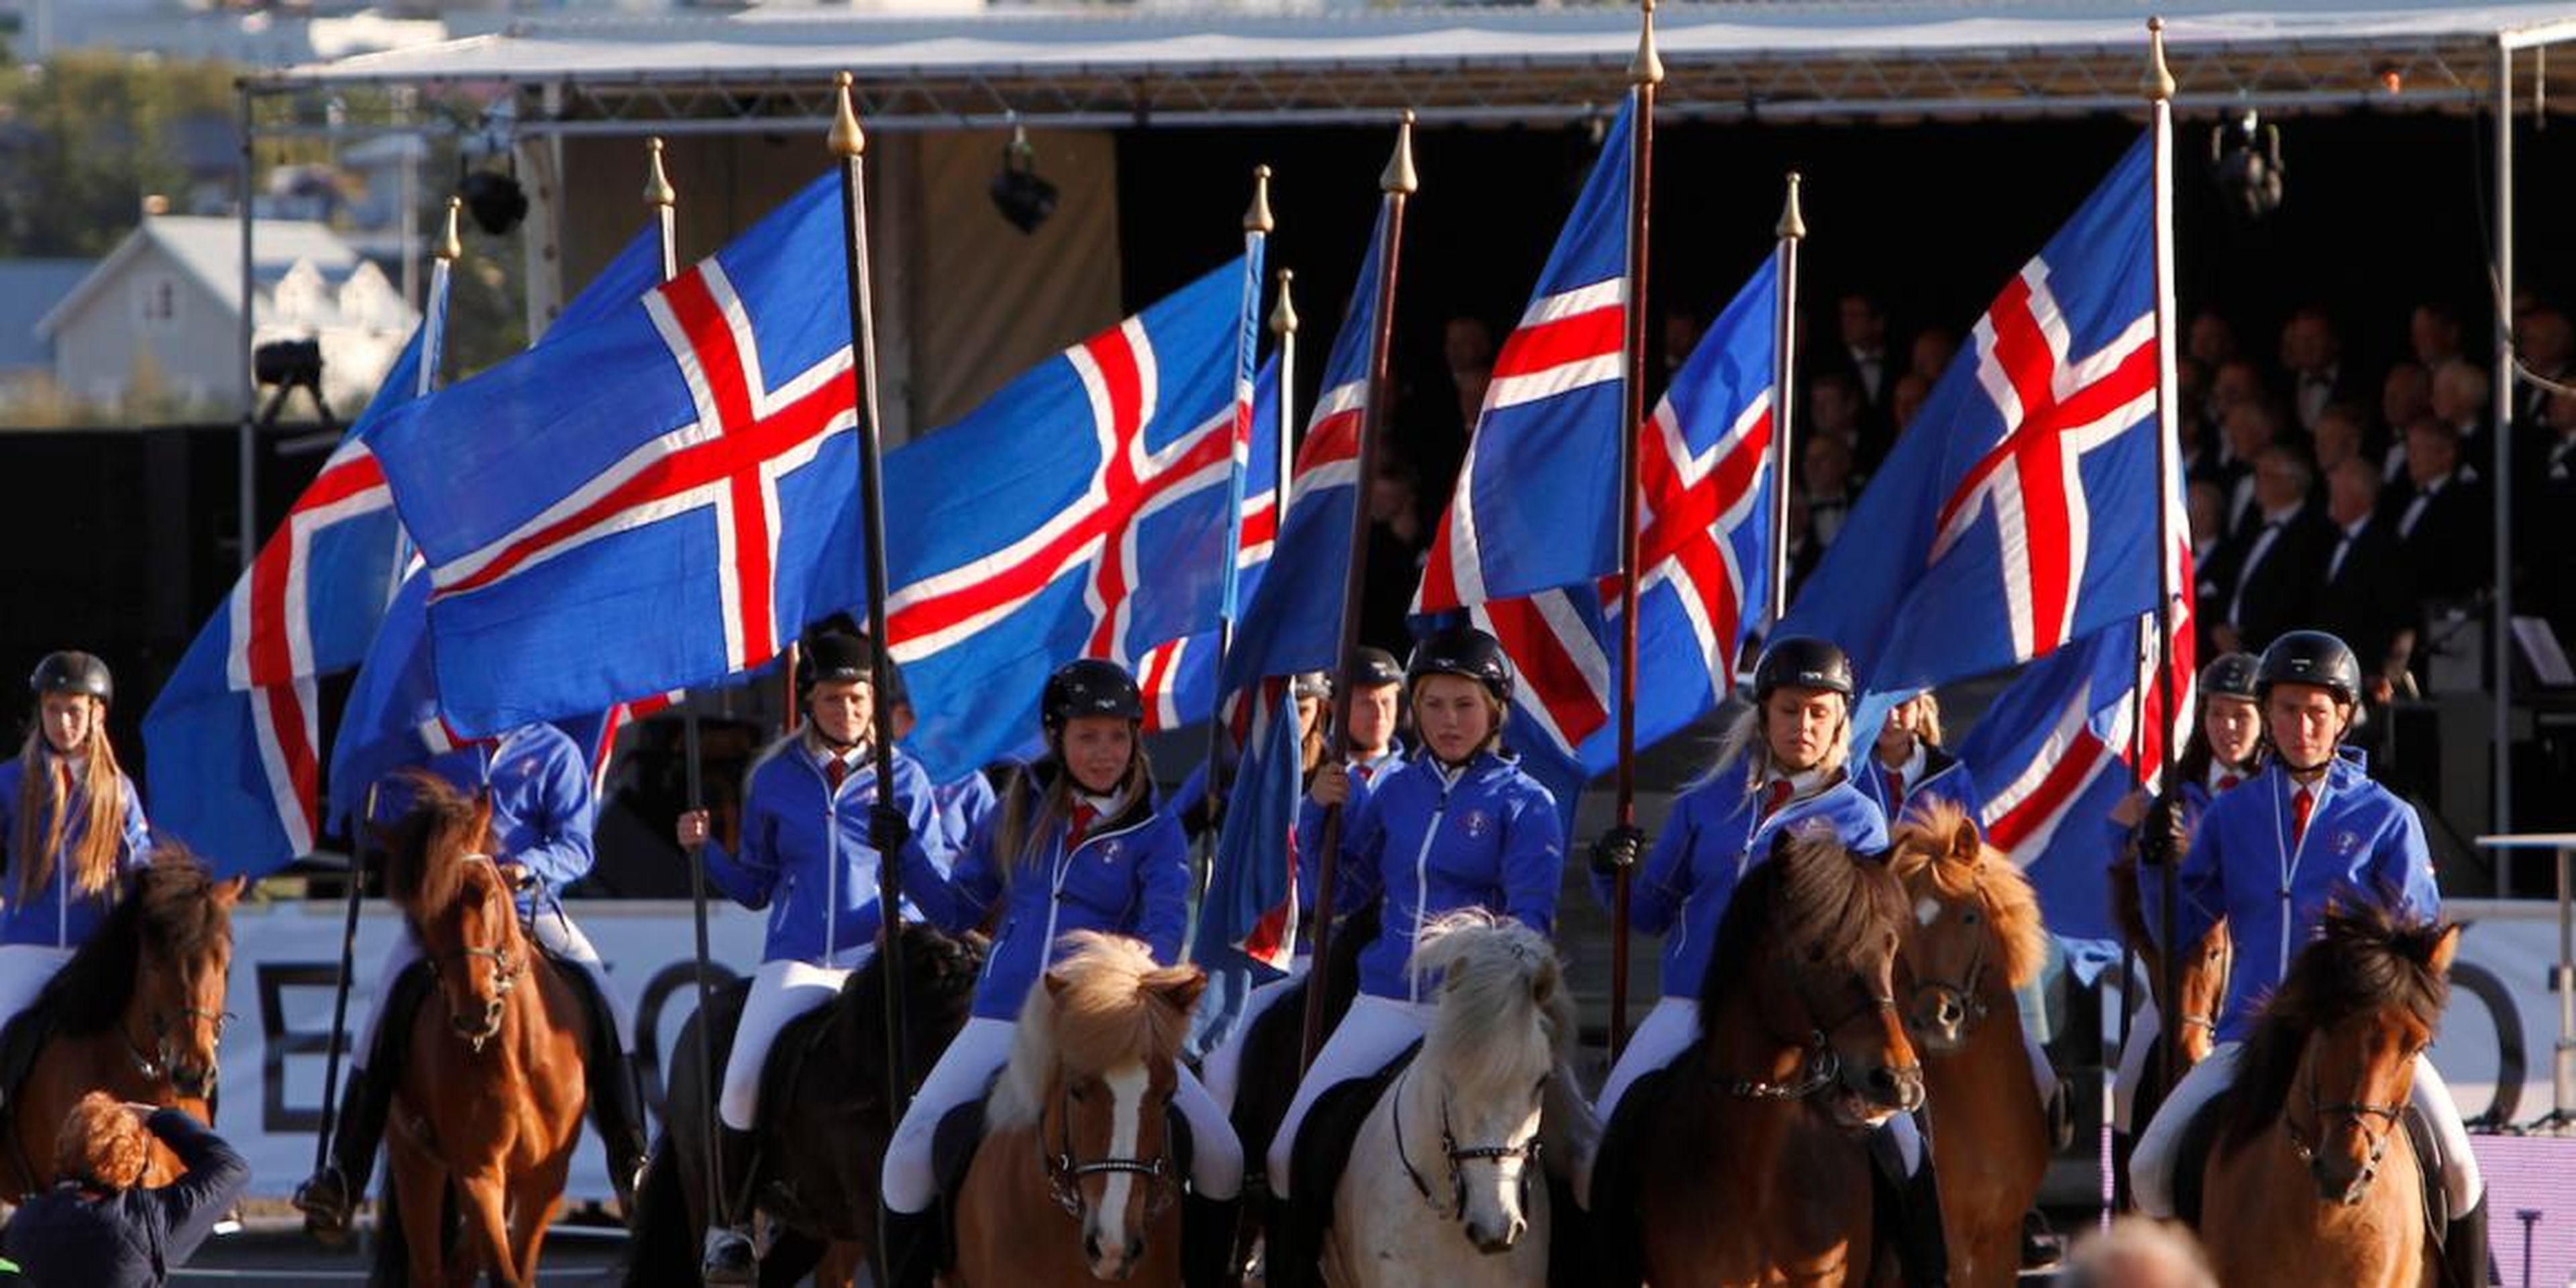 9. Iceland